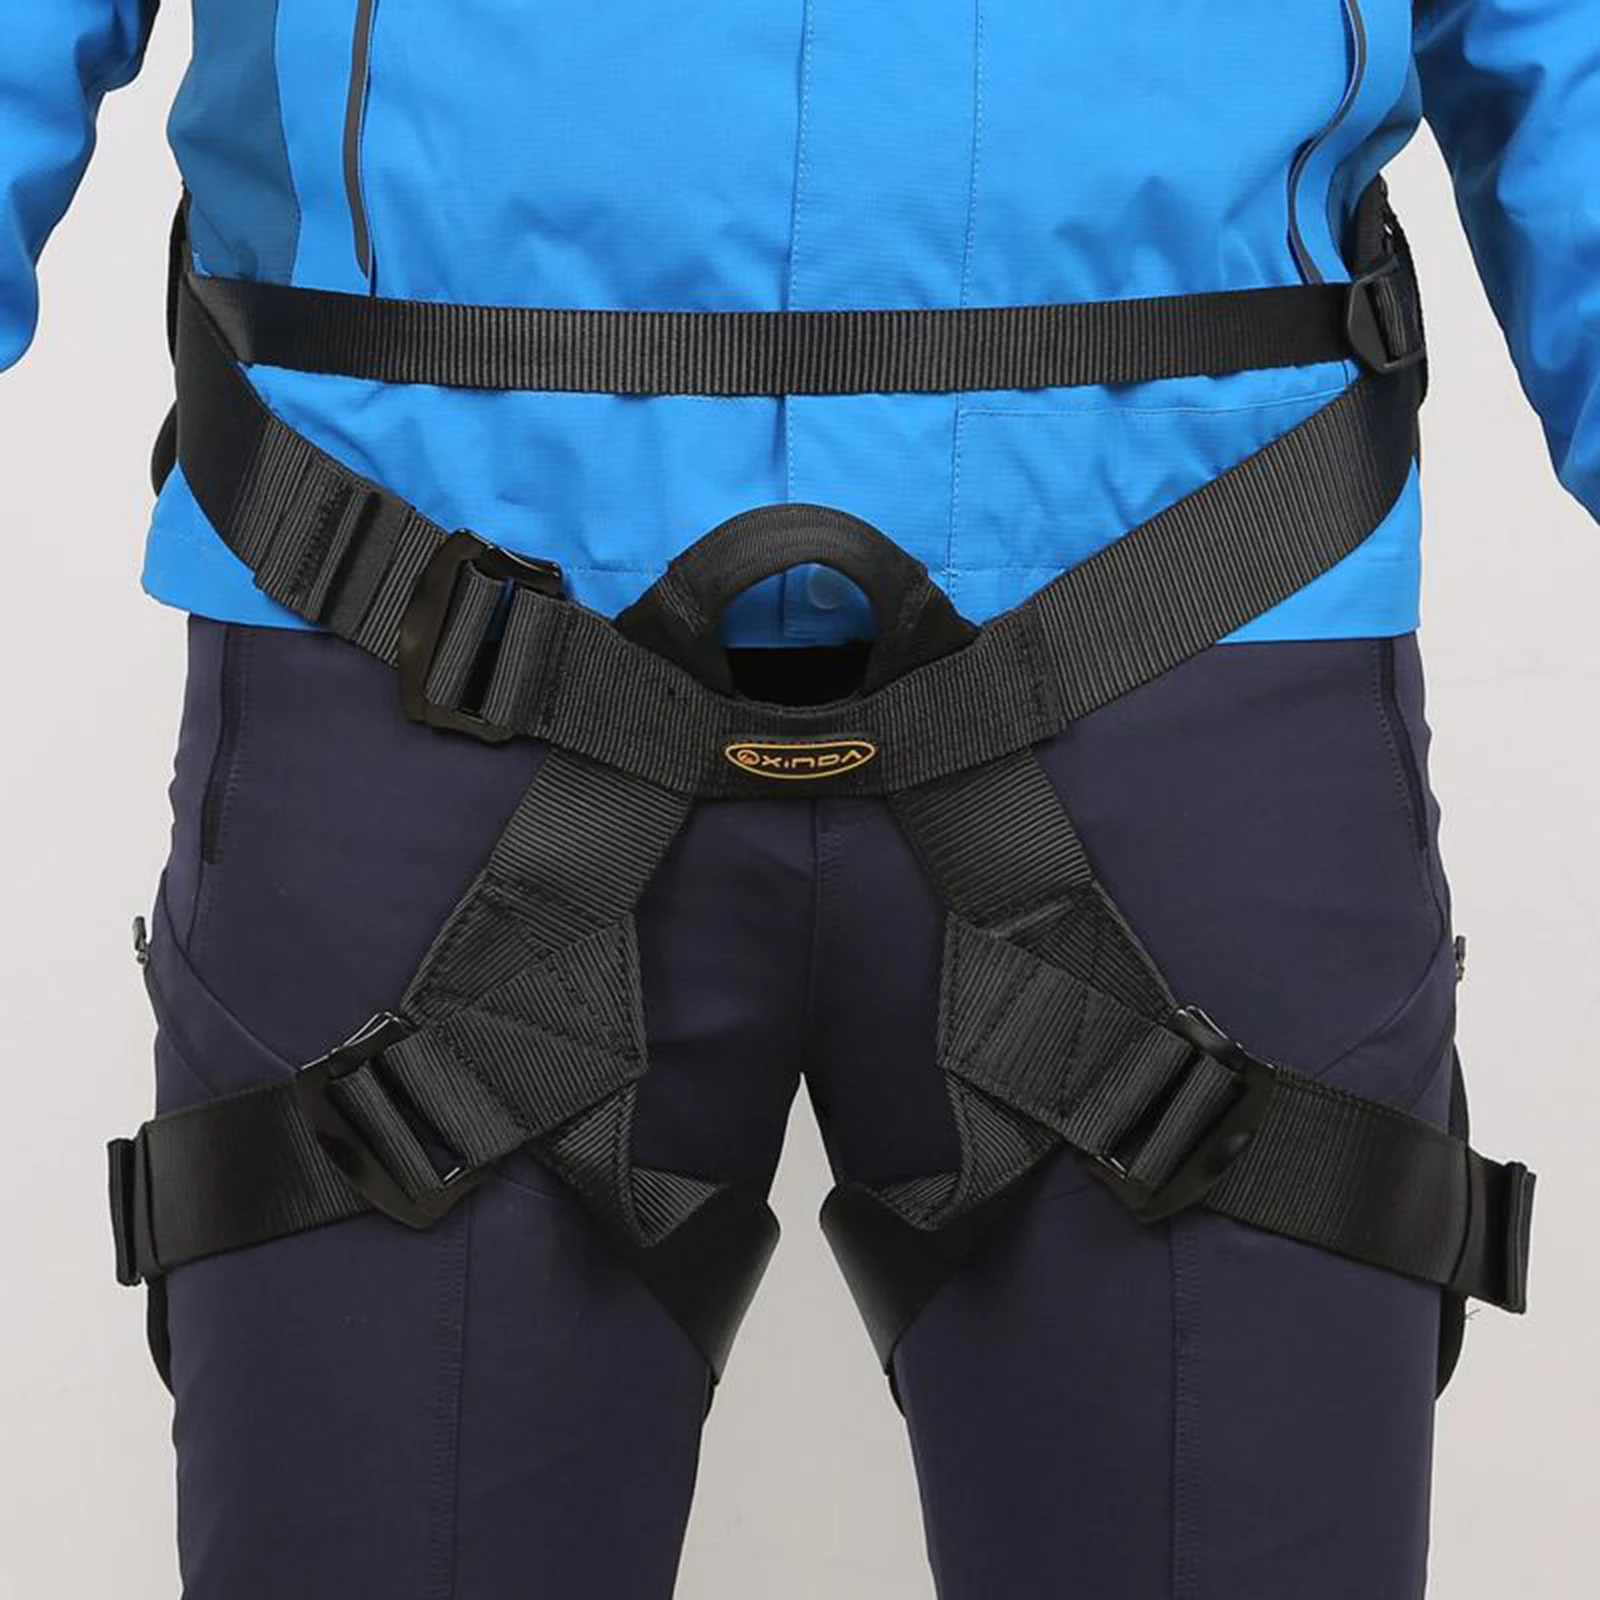 Professional Outdoor Sports Safety Belt Rock Mountain Climbing Harness Waist Support Half Body Seat Belt Aerial Survival